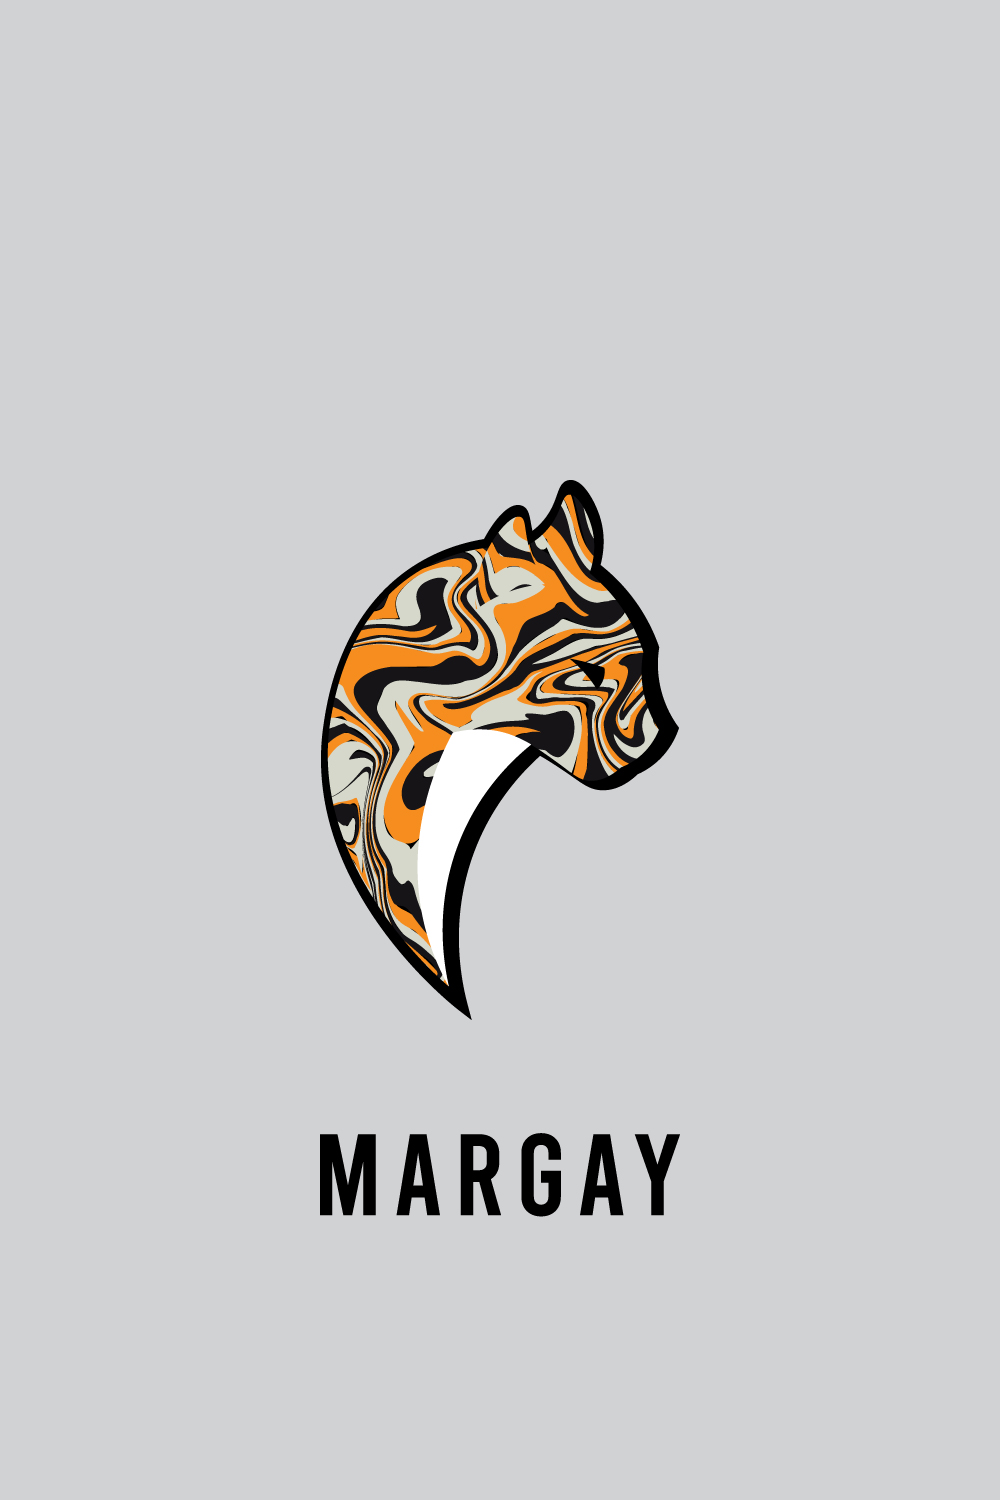 Margay Logo pinterest preview image.